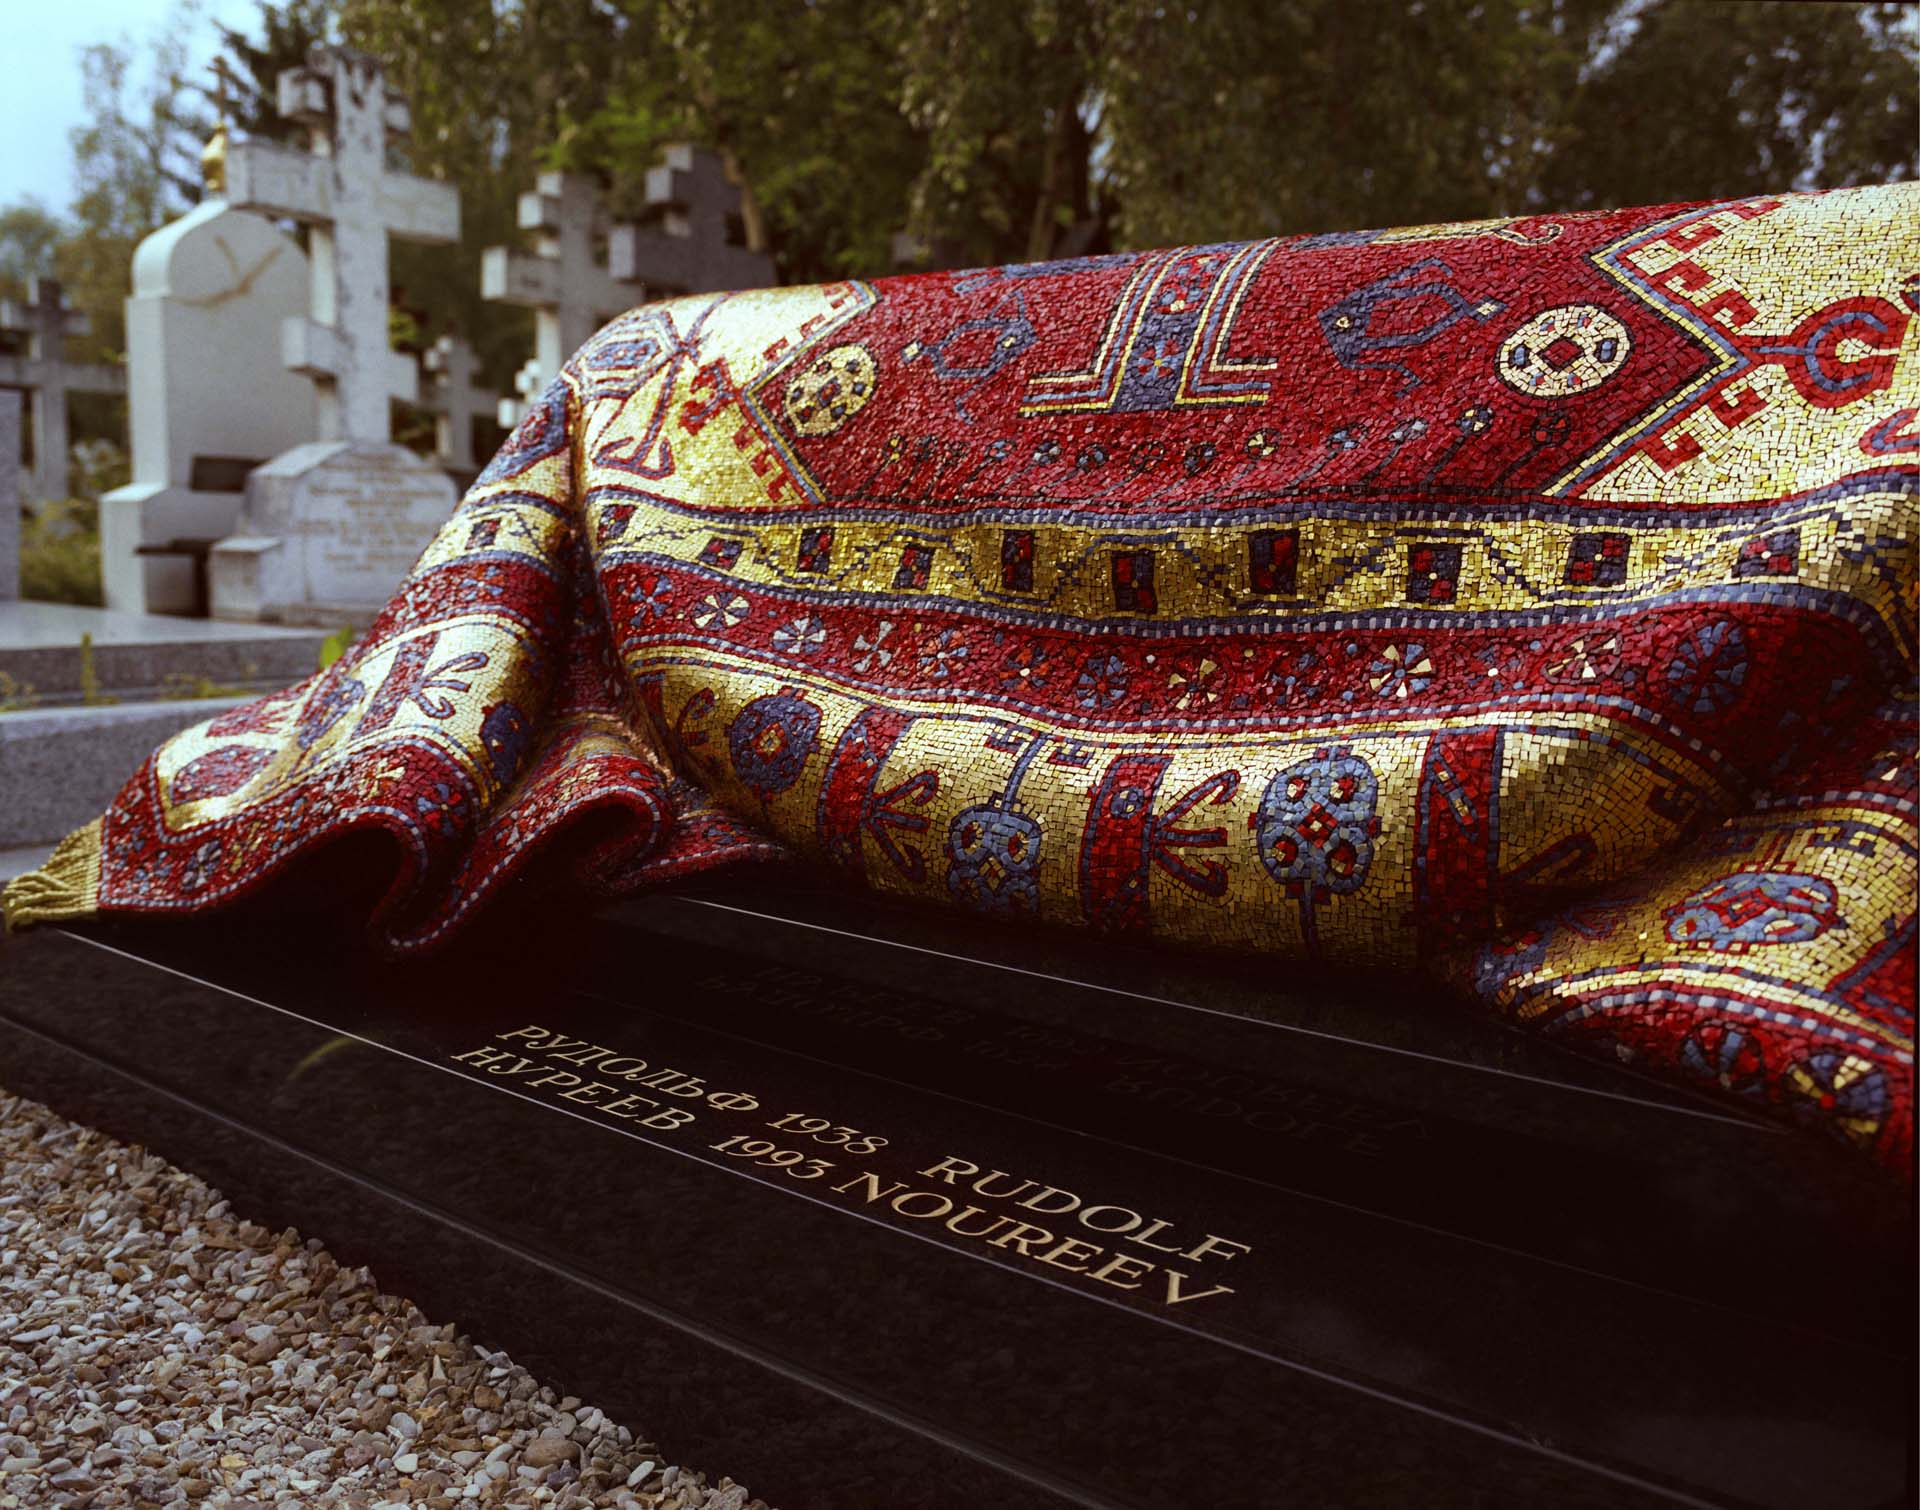 The Rudolf Nureyev Grave